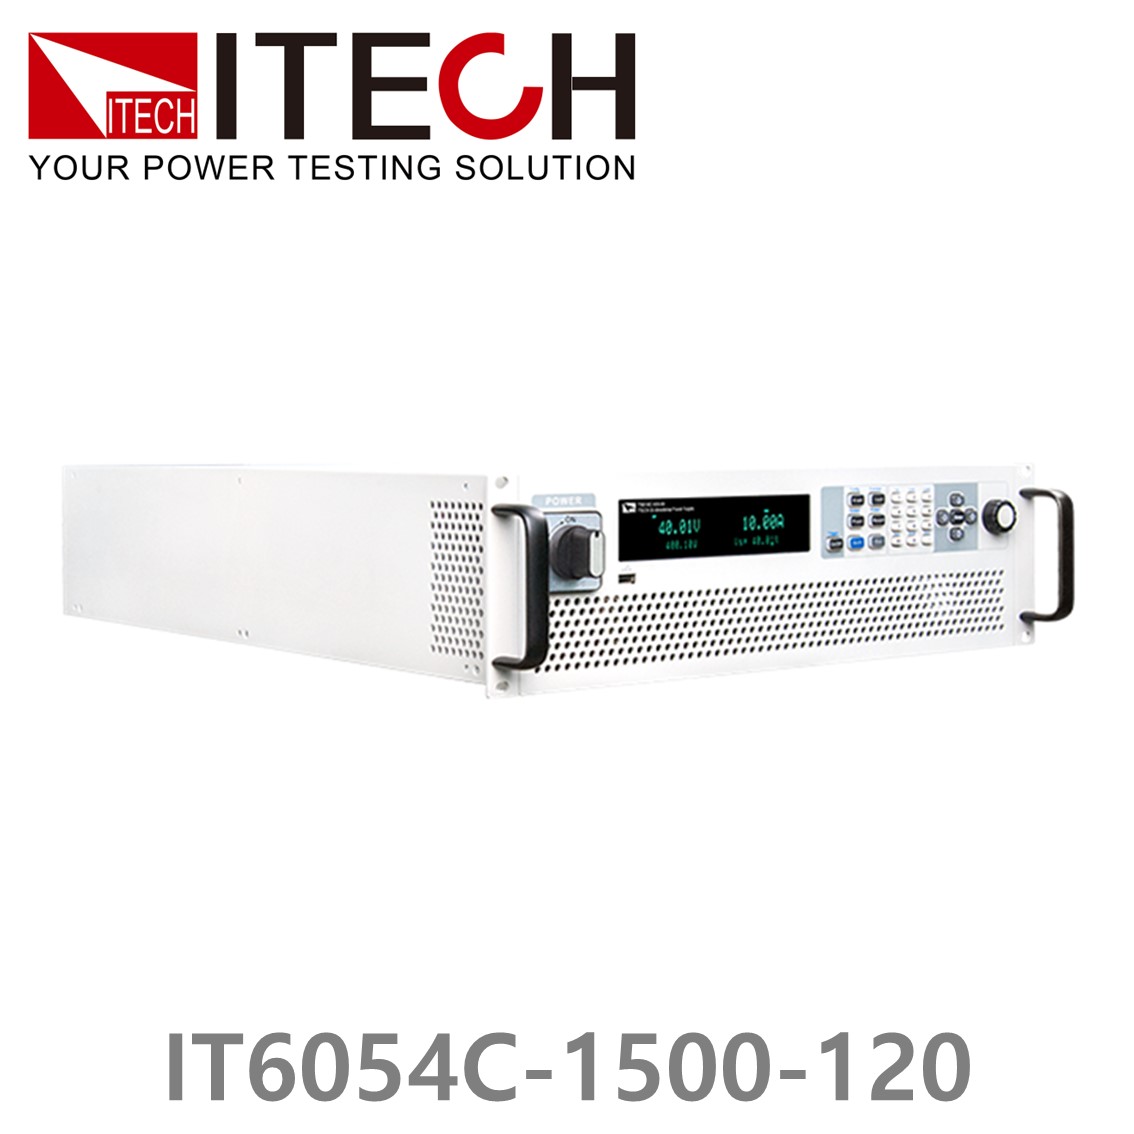 [ ITECH ] IT6054C-1500-120 양방향 프로그래머블 DC 전원공급기 1500V/120A/54kW